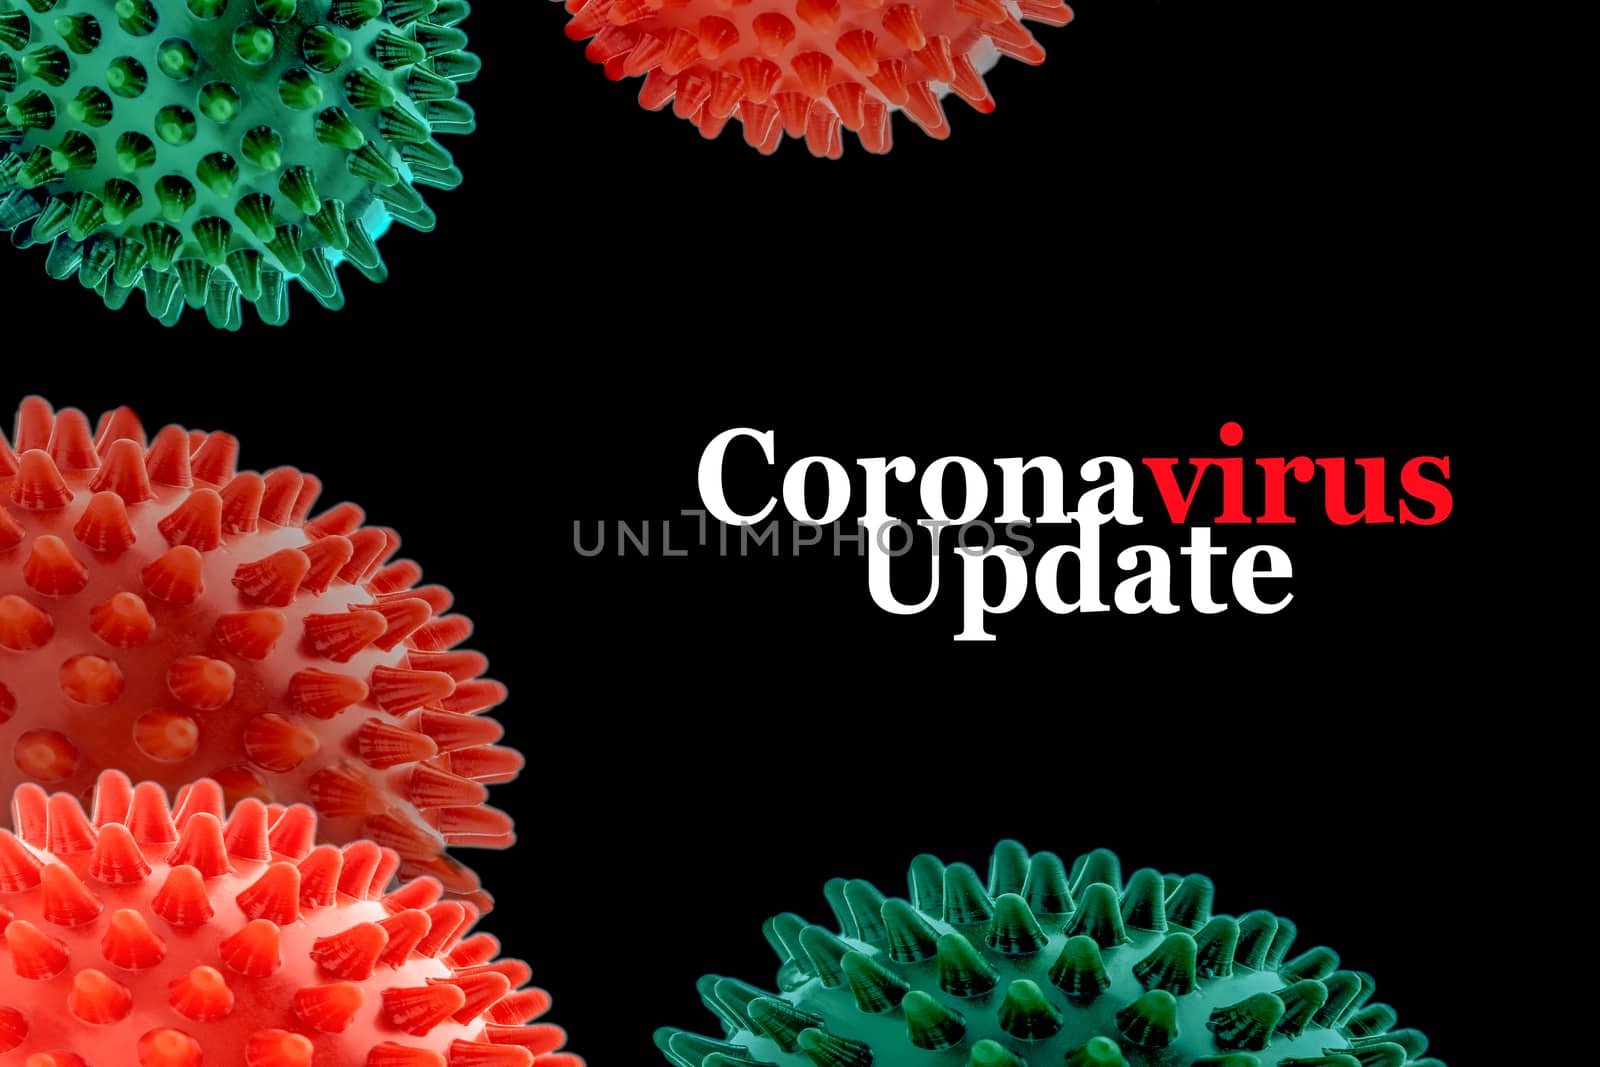 CORONAVIRUS UPDATE text on black background. Covid-19 or Coronavirus concept by silverwings